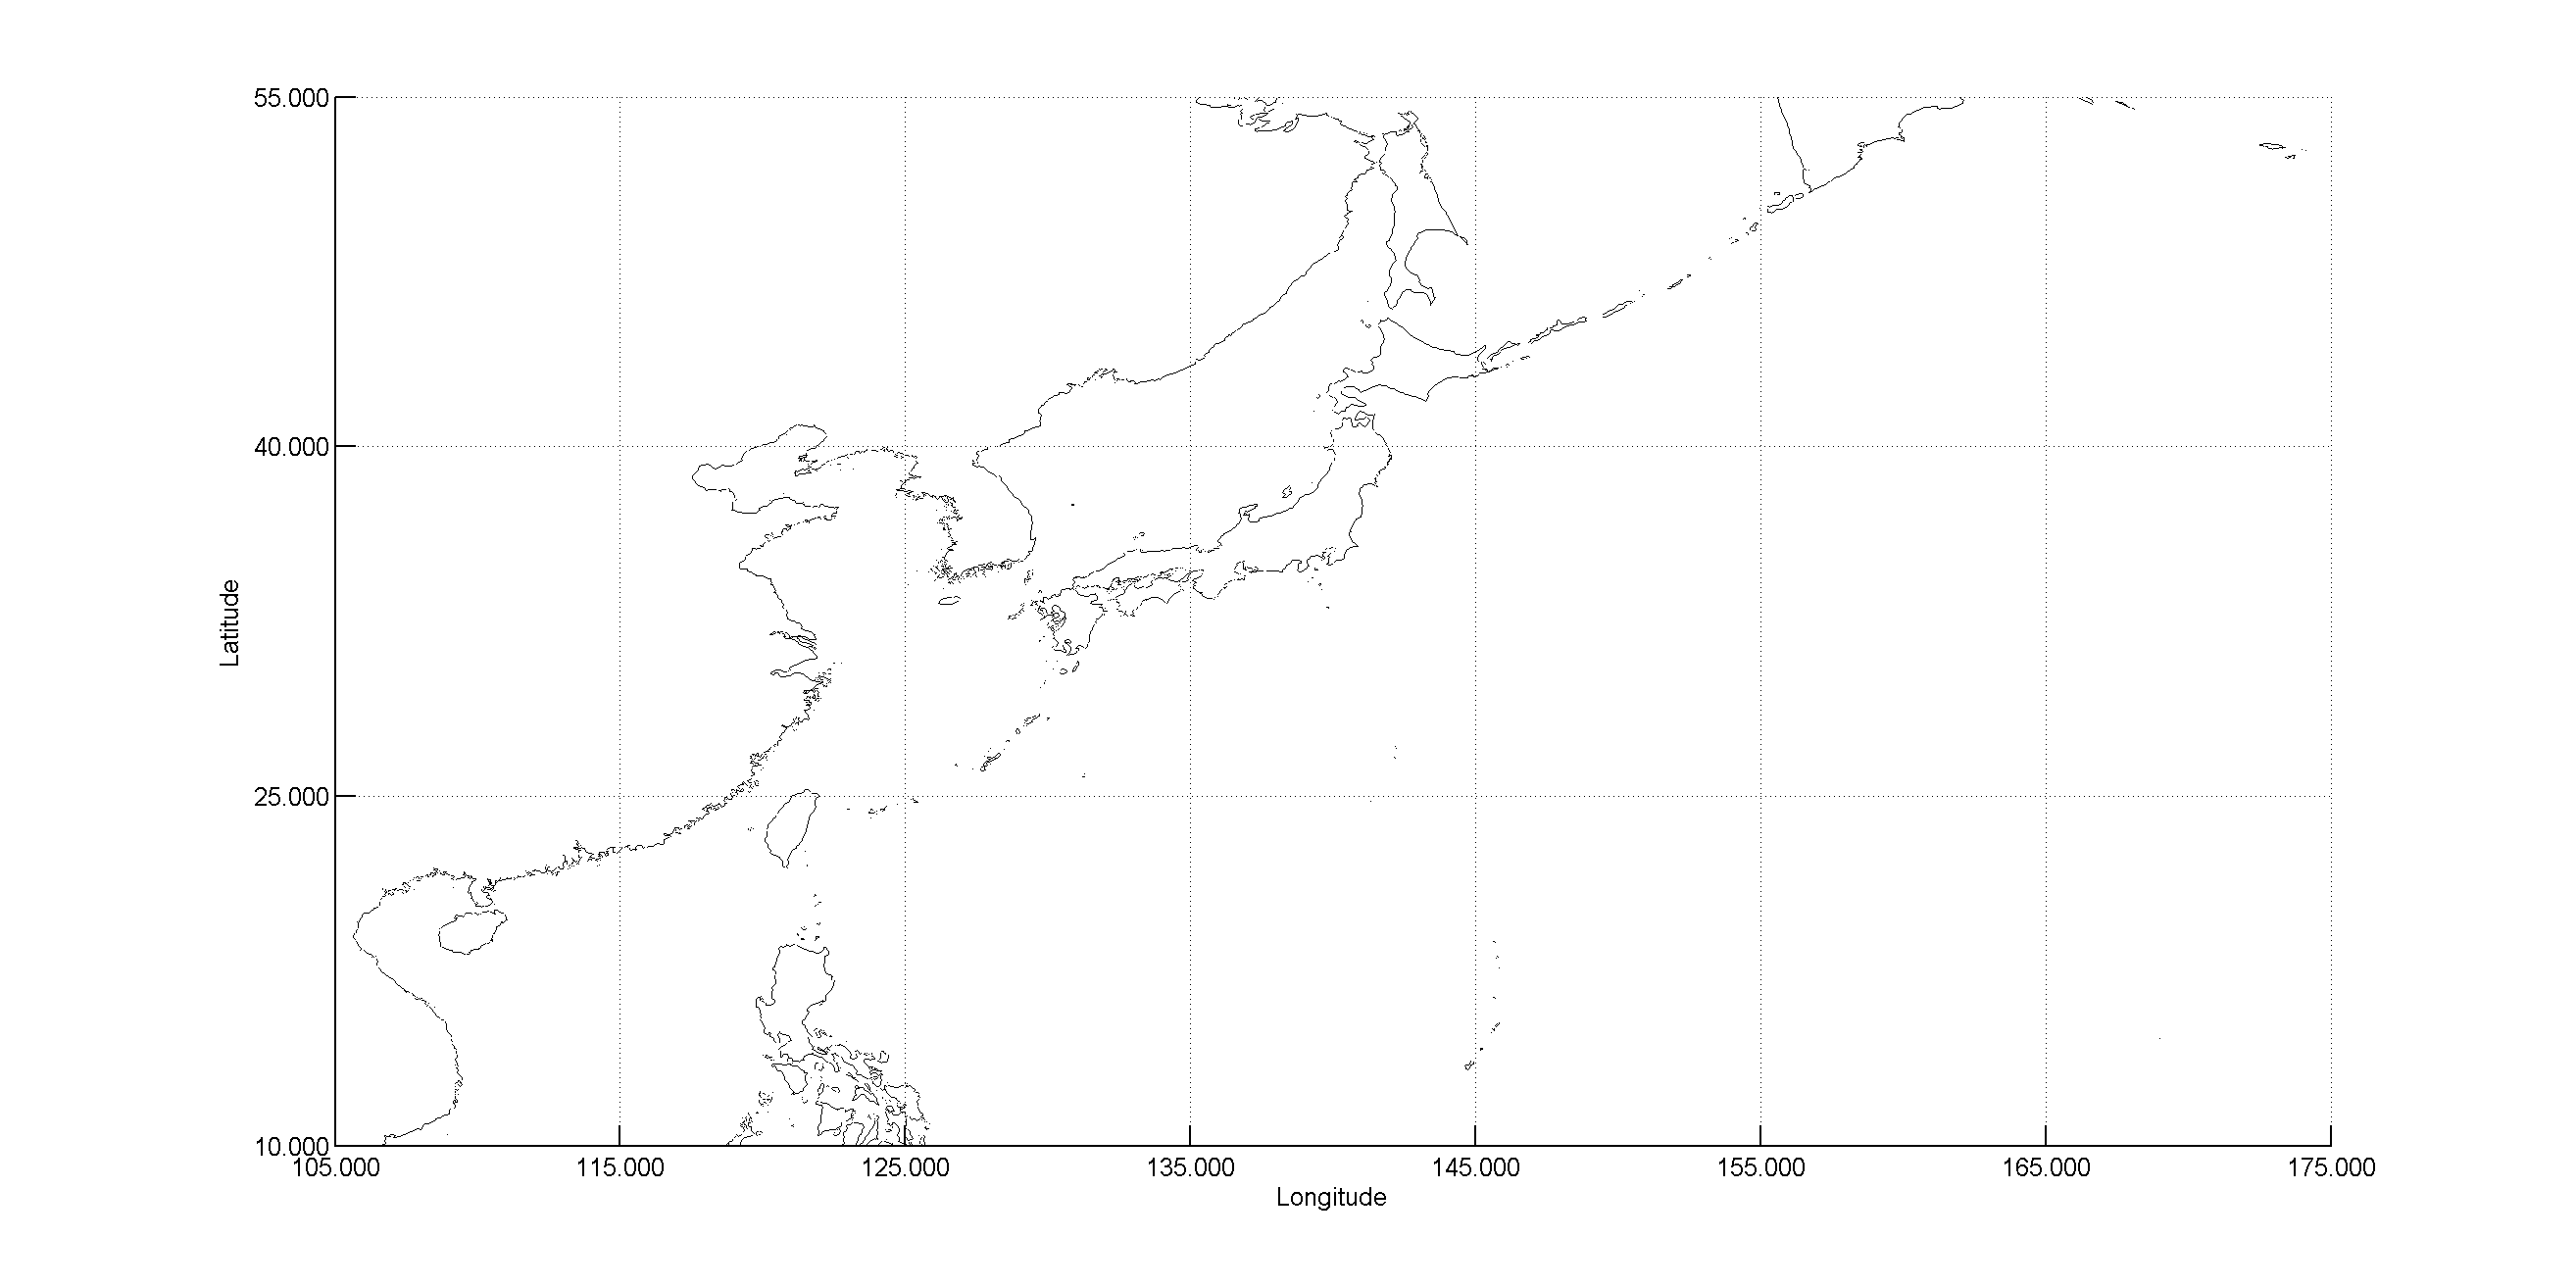 CYCLE_189 - Japan Ascending passes